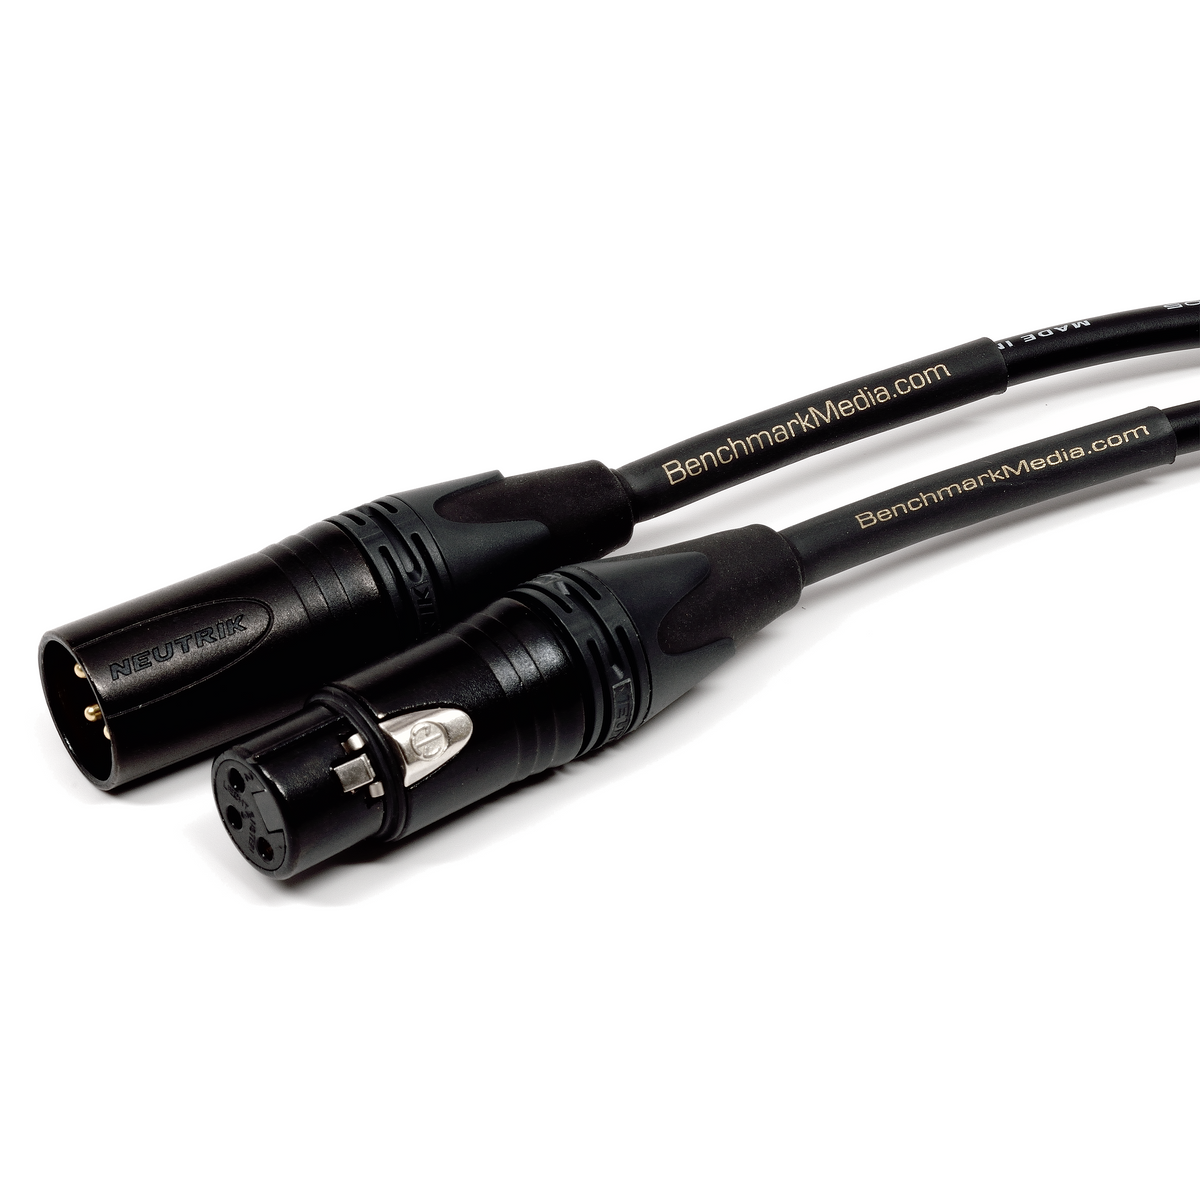 Benchmark Star-Quad XLR Cable